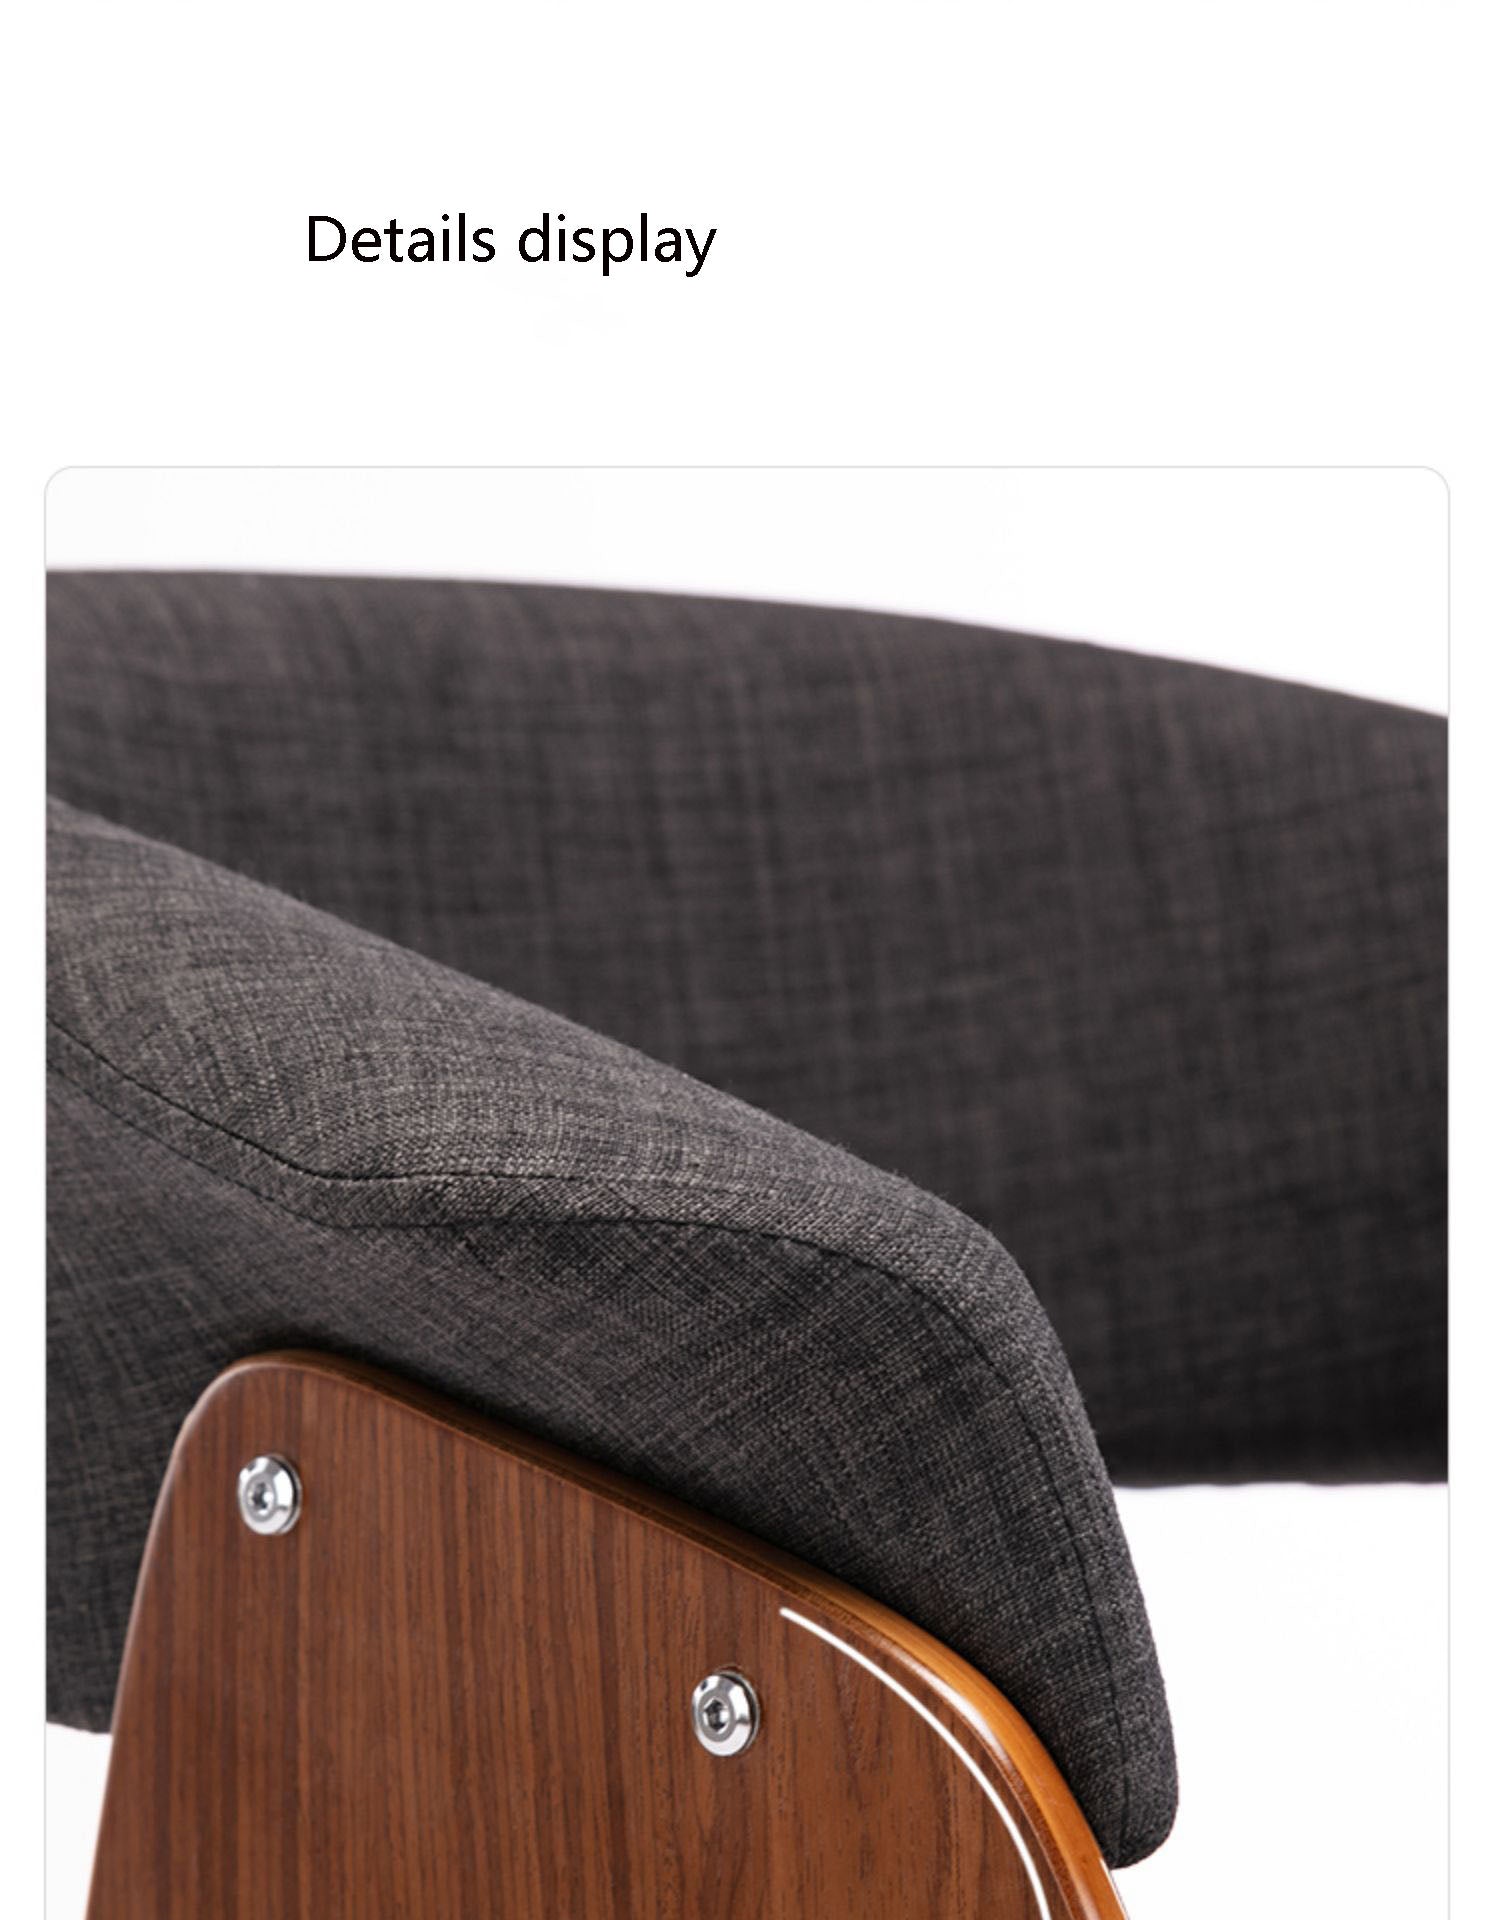 Walnut Wood Upholstered Arm Chair - 4 Seasons Home Gadgets